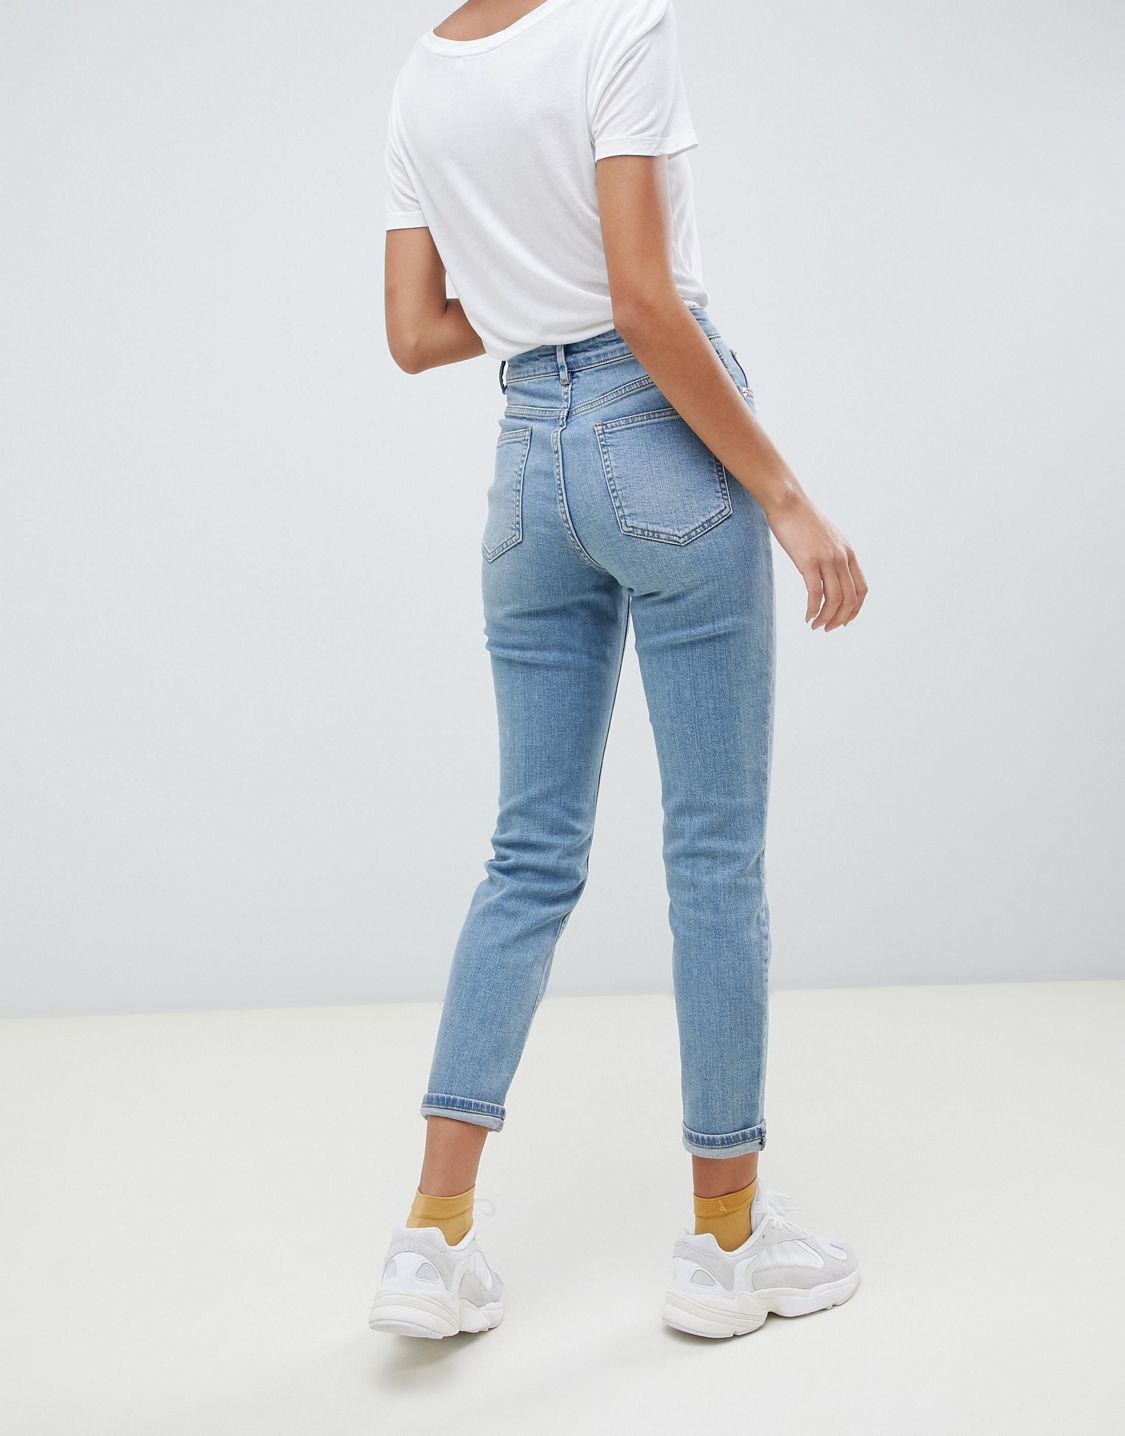 High Rise Jeans (джинсы с высокой посадкой)